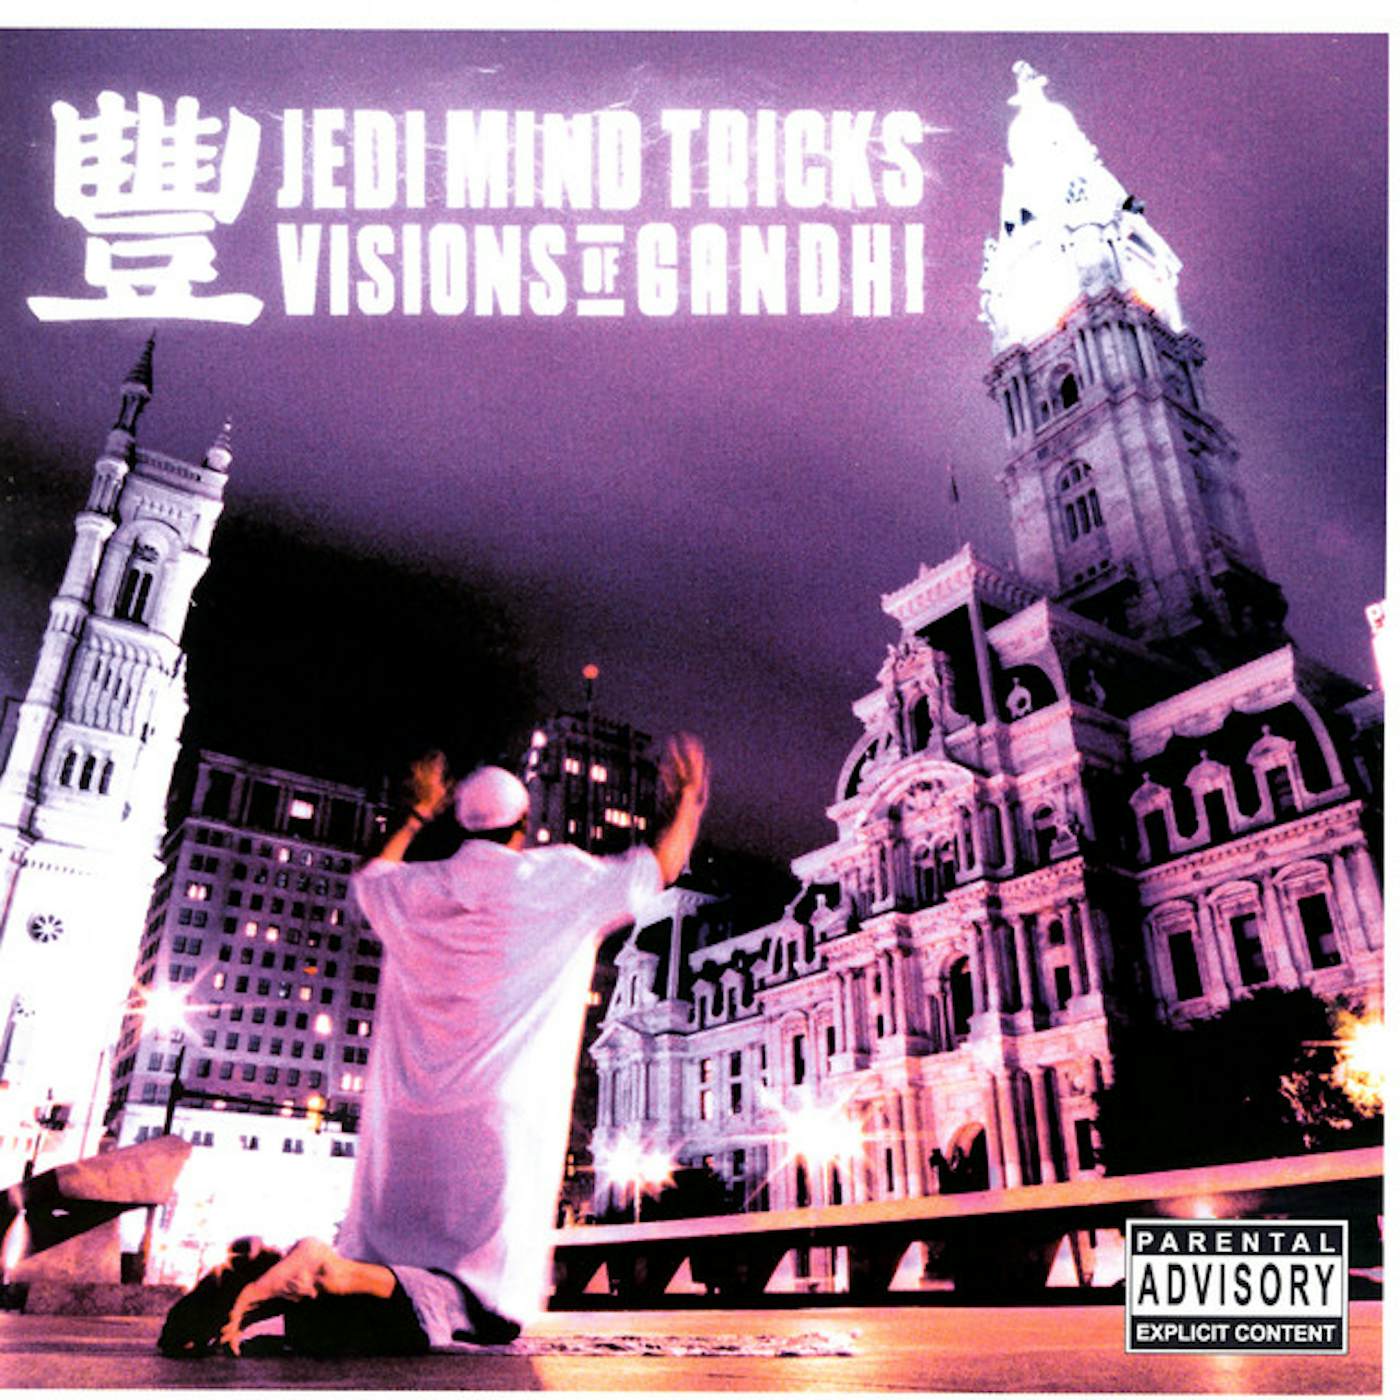 Jedi Mind Tricks VISIONS OF GHANDI Vinyl Record